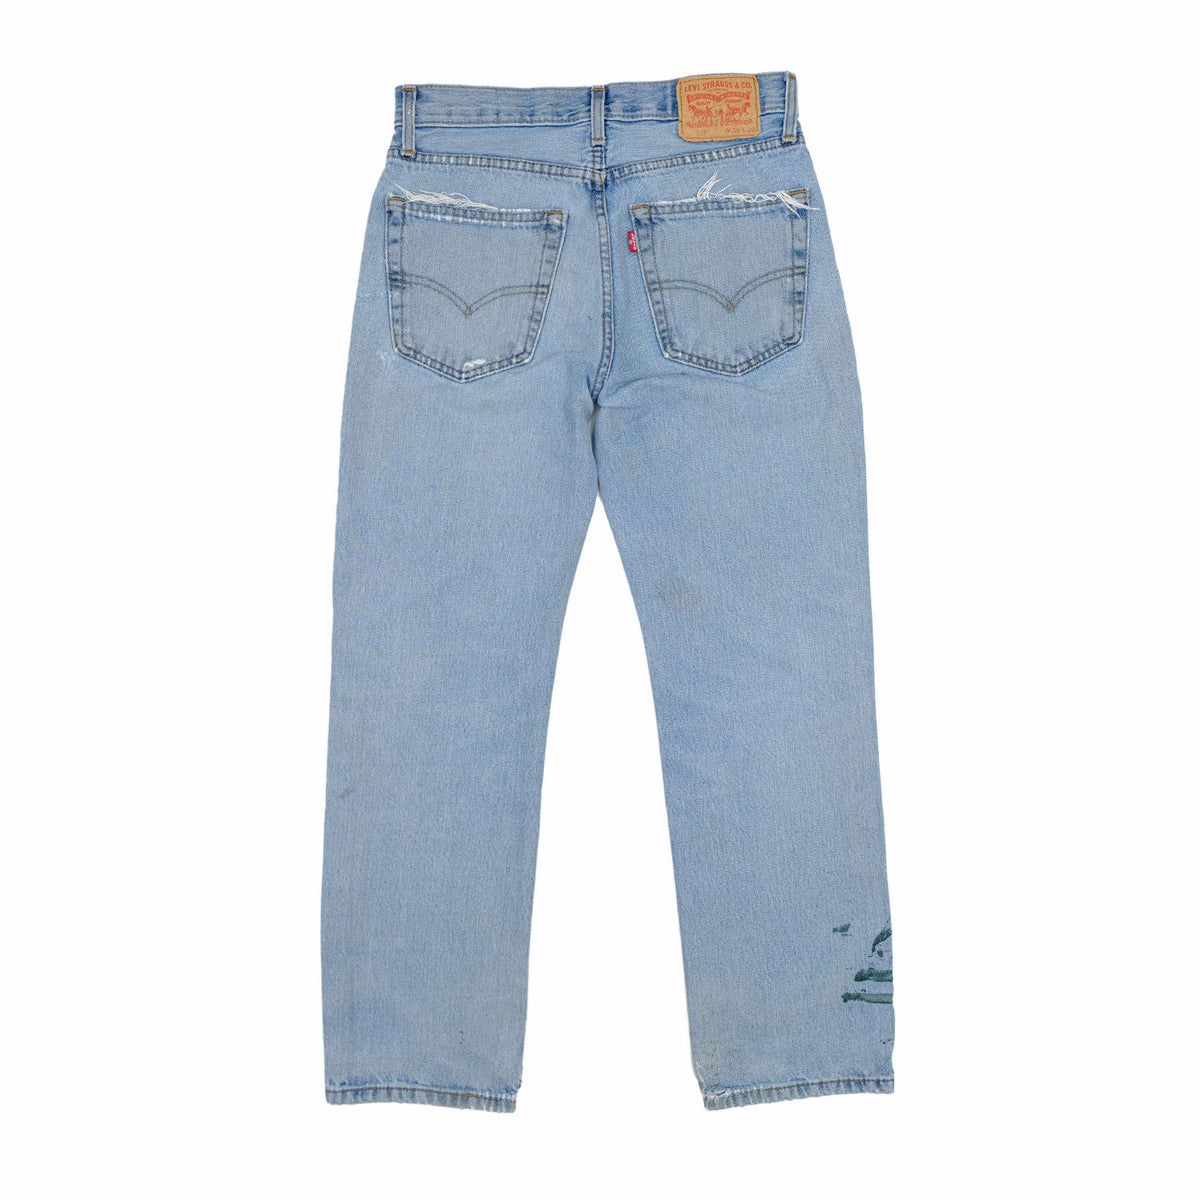 reWork Levi's Jeans (30x29)